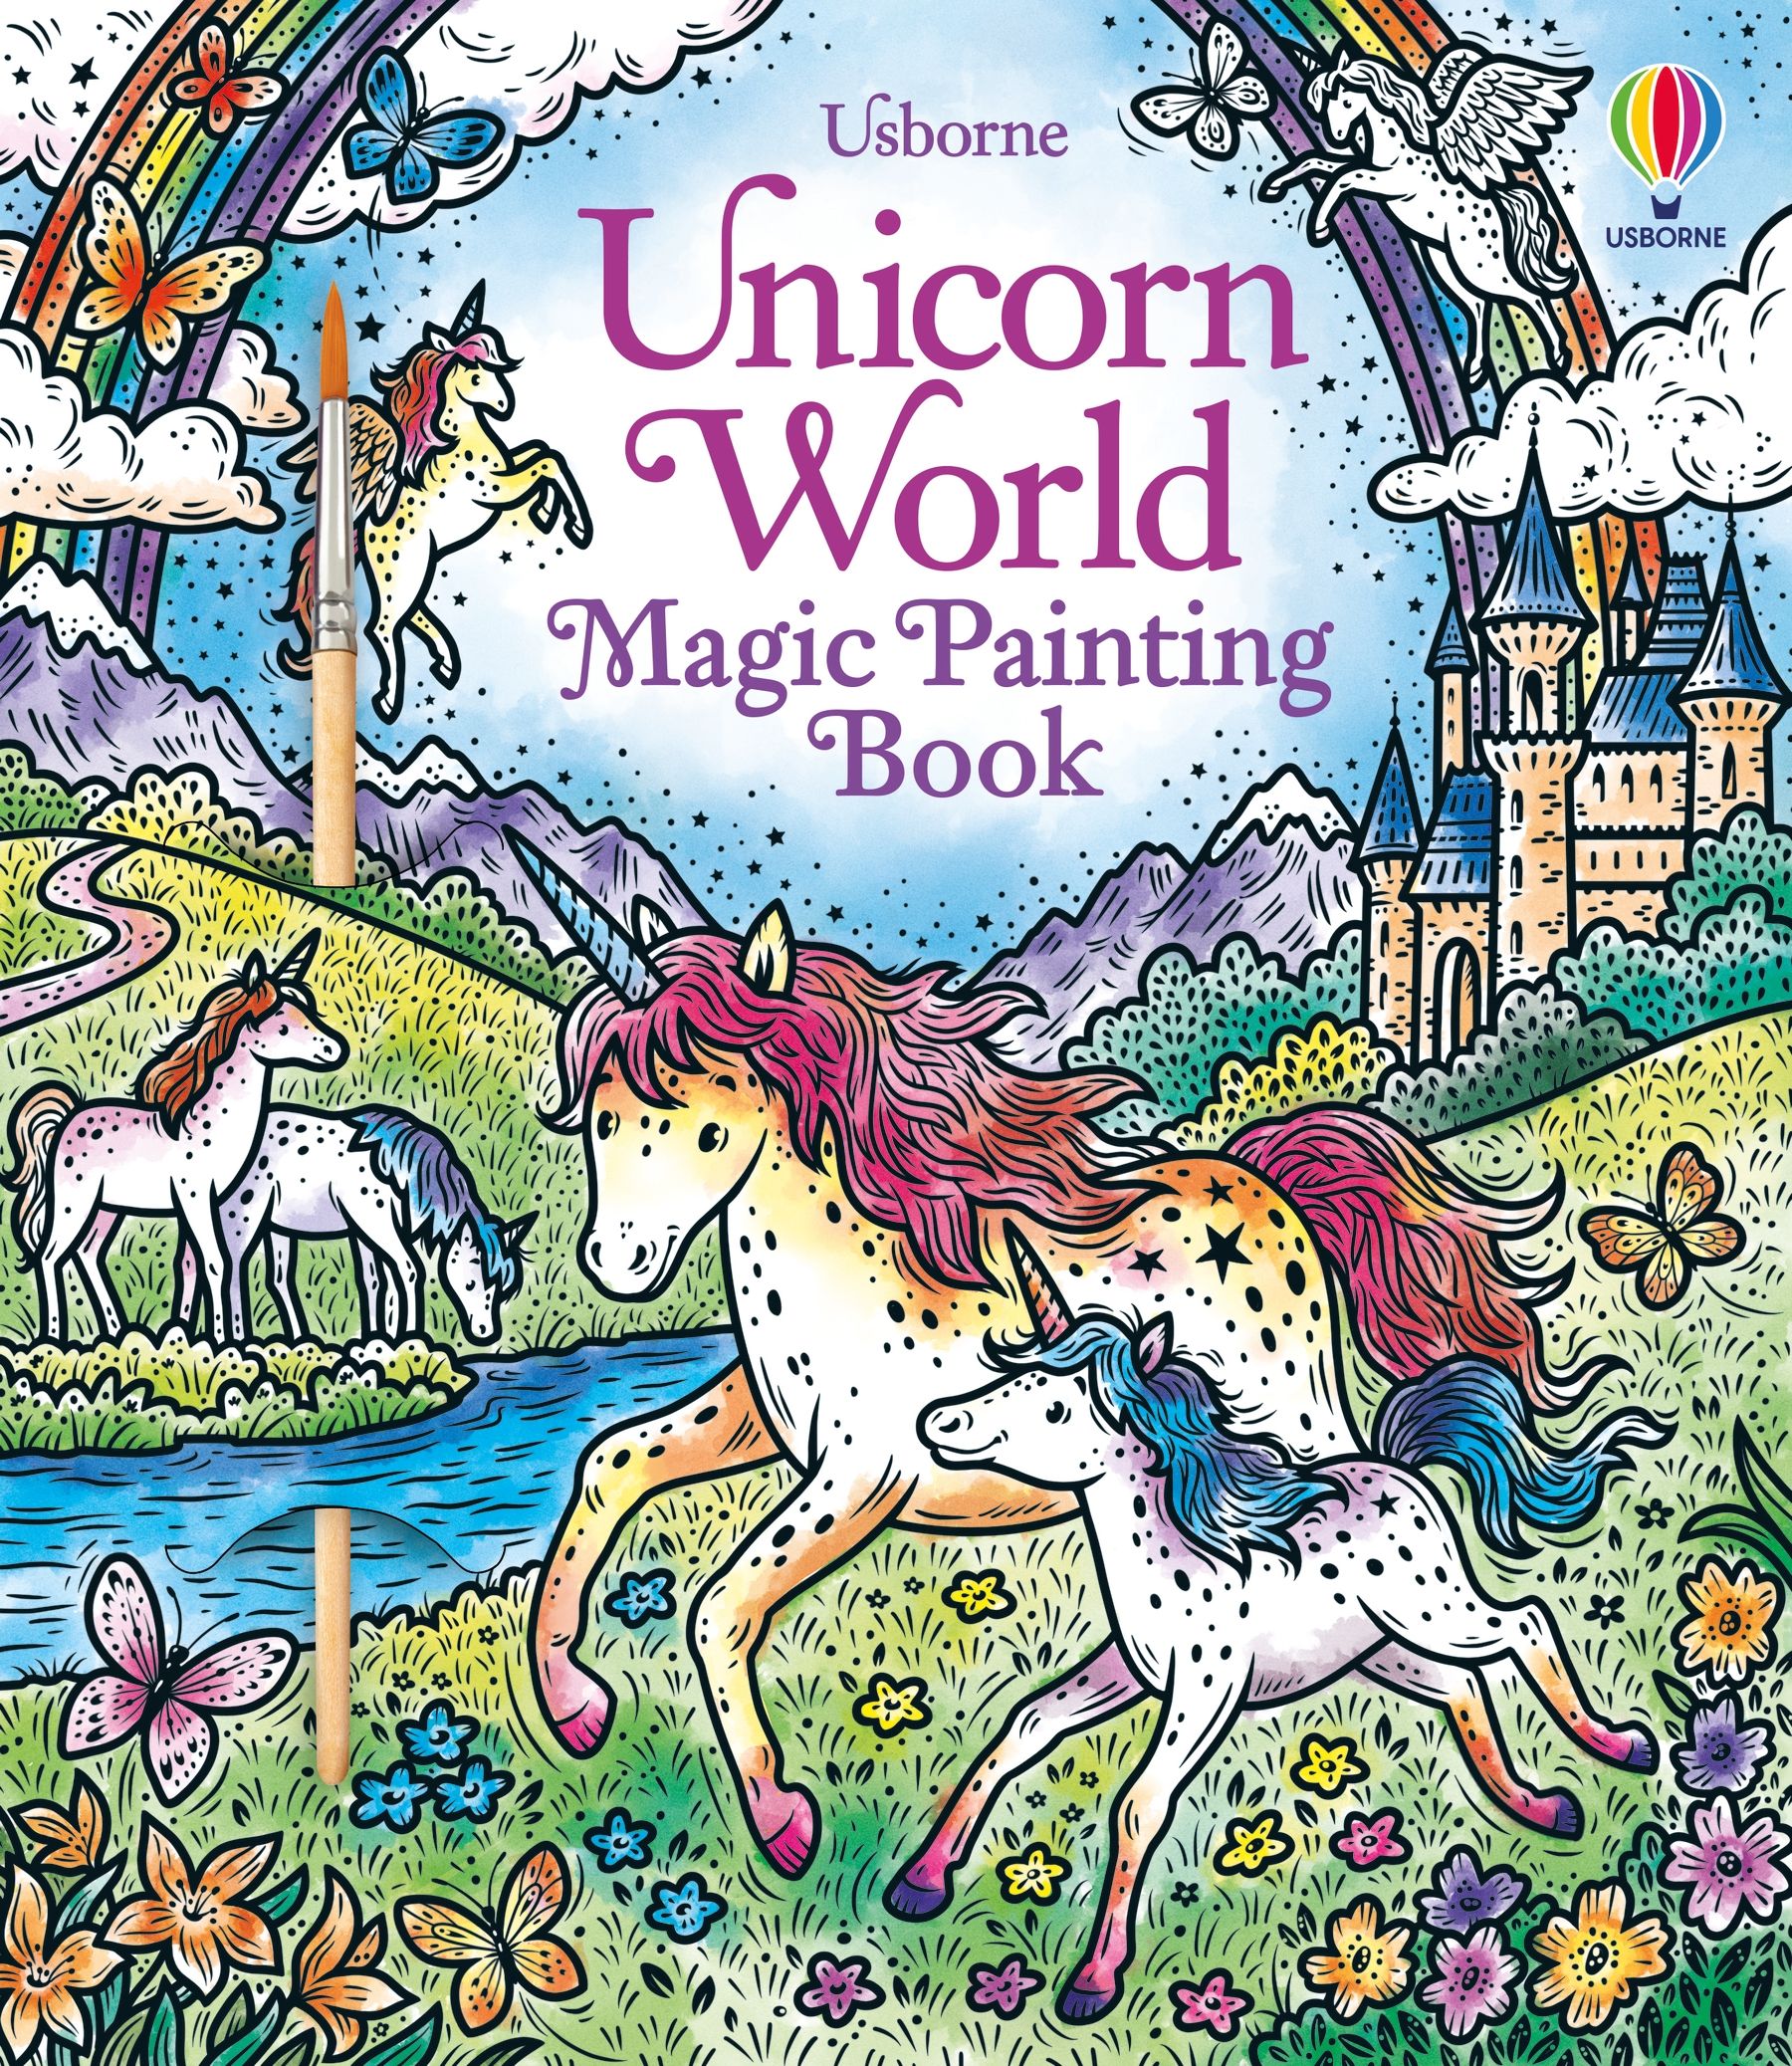 Usborne Books | Magic Painting Book - Unicorn World